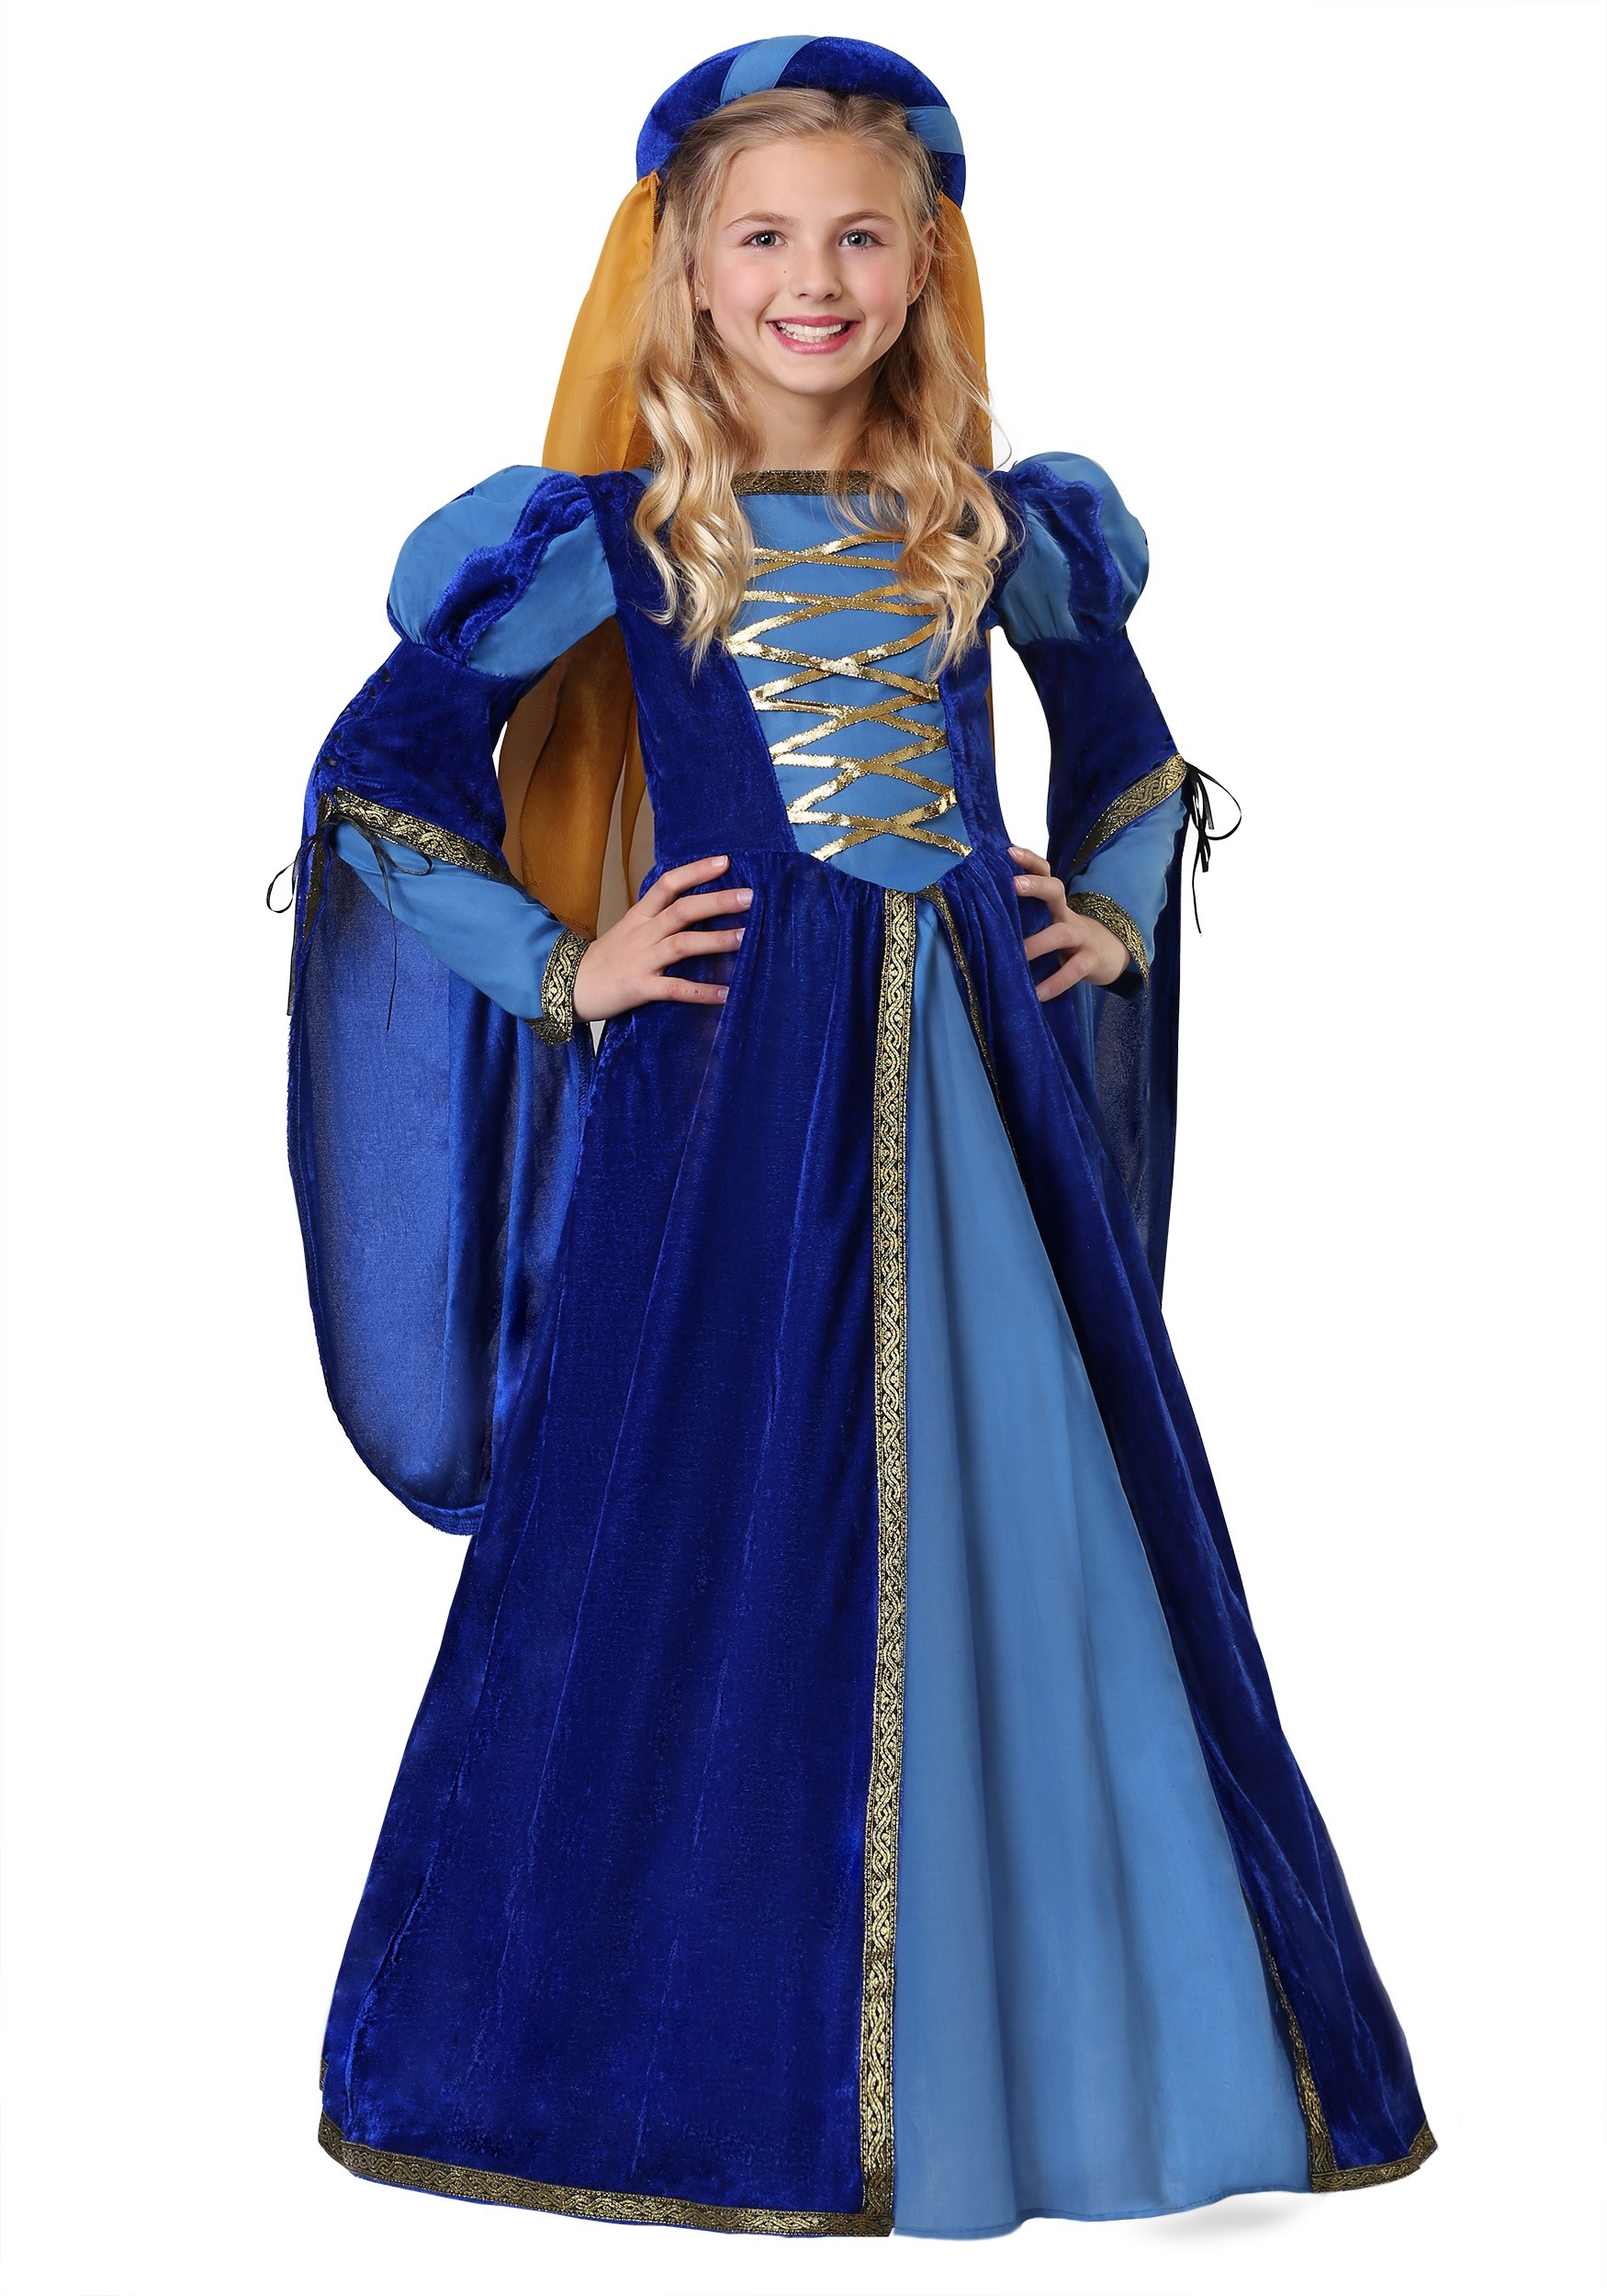 Photos - Fancy Dress FUN Costumes Renaissance Queen Costume for Girls Orange/Blue FUN6806CH